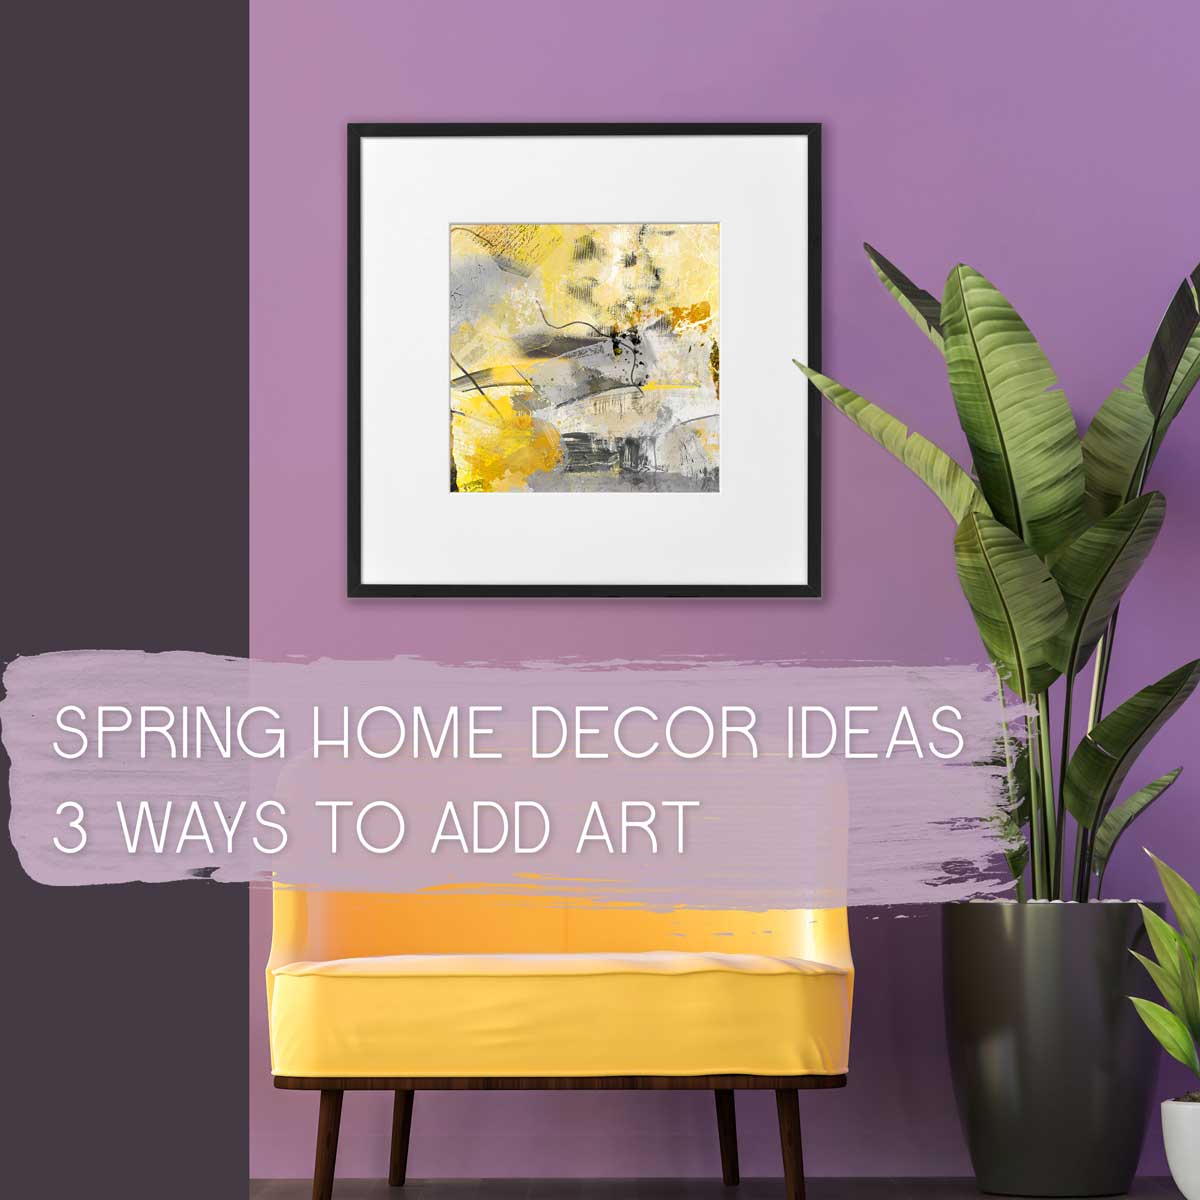 Spring home decor ideas - 3 ways to add art